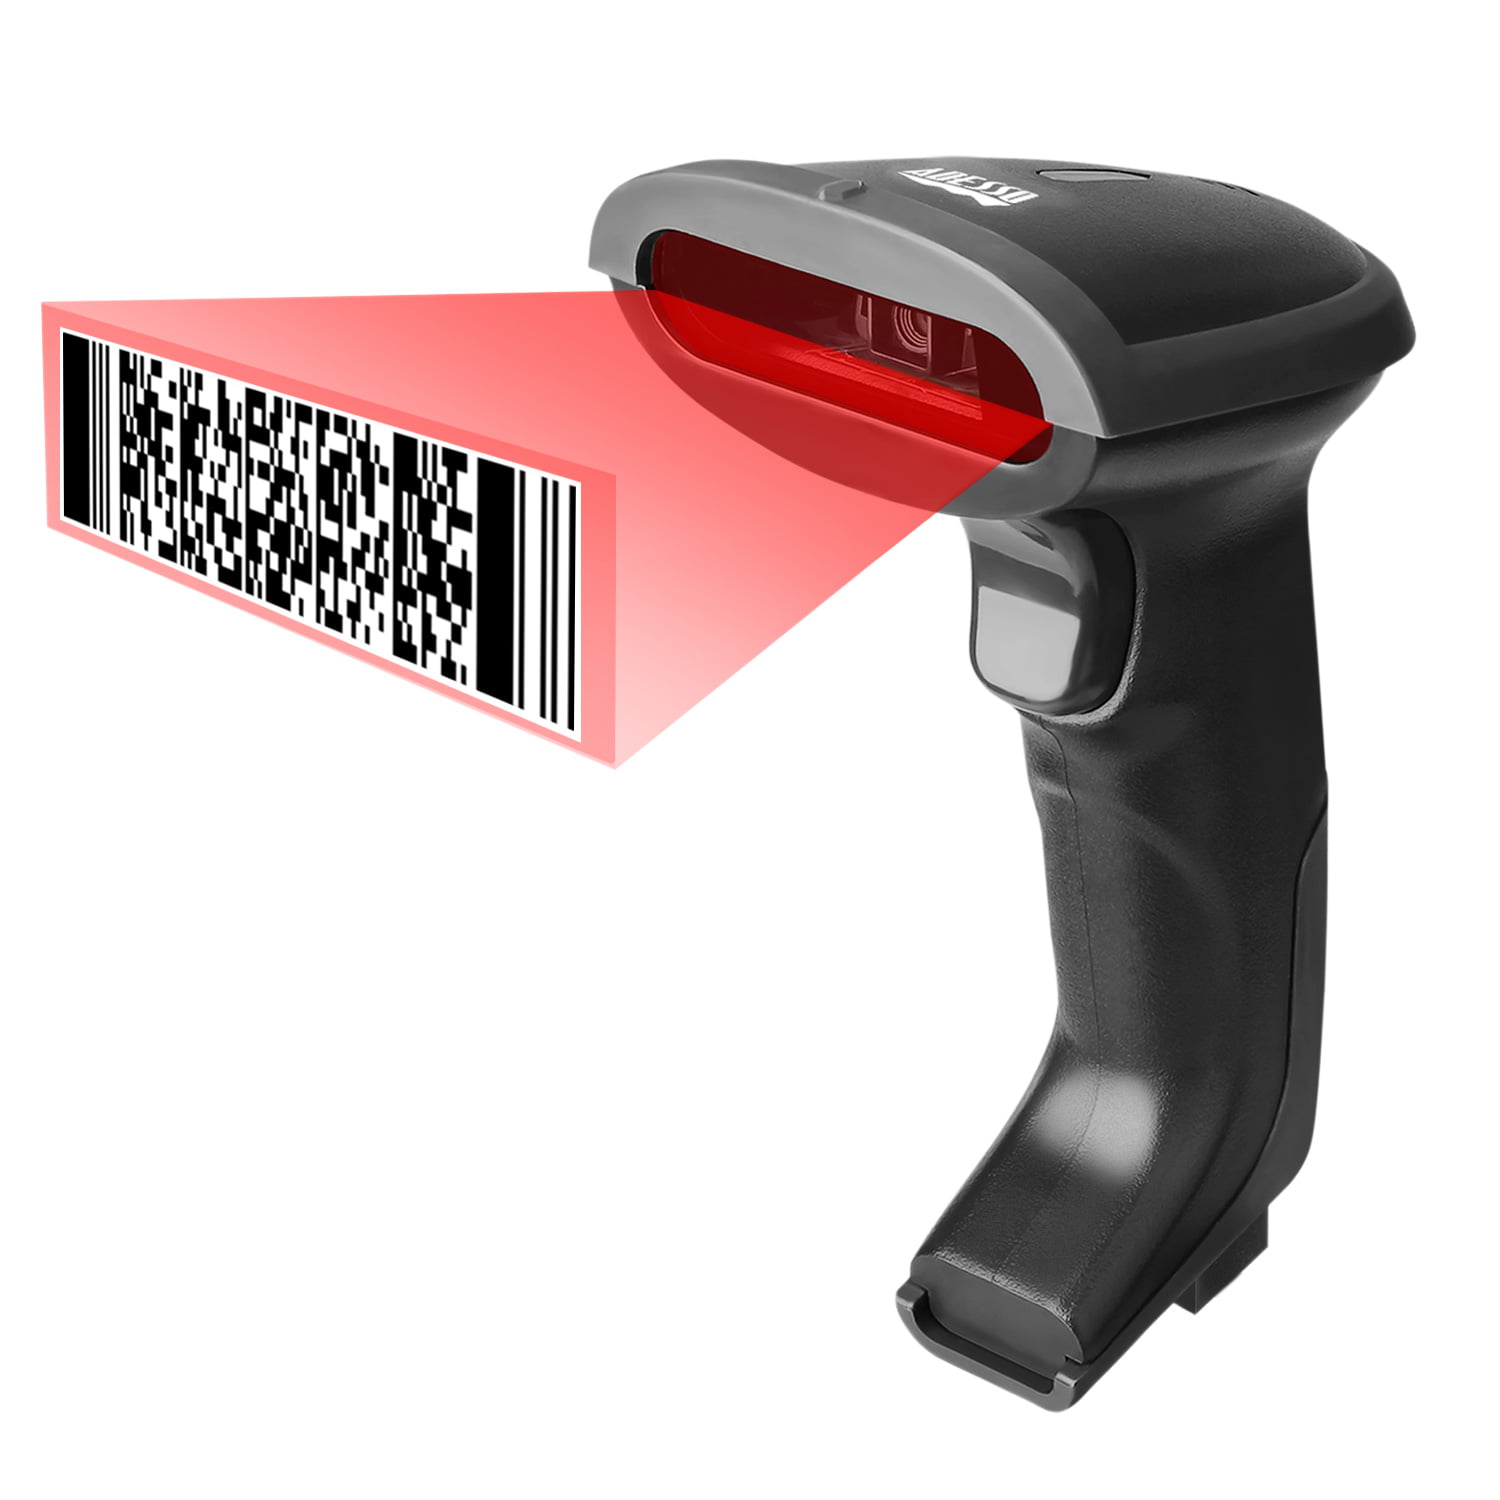 NuScan 5100 Barcode Scanner - Walmart.com